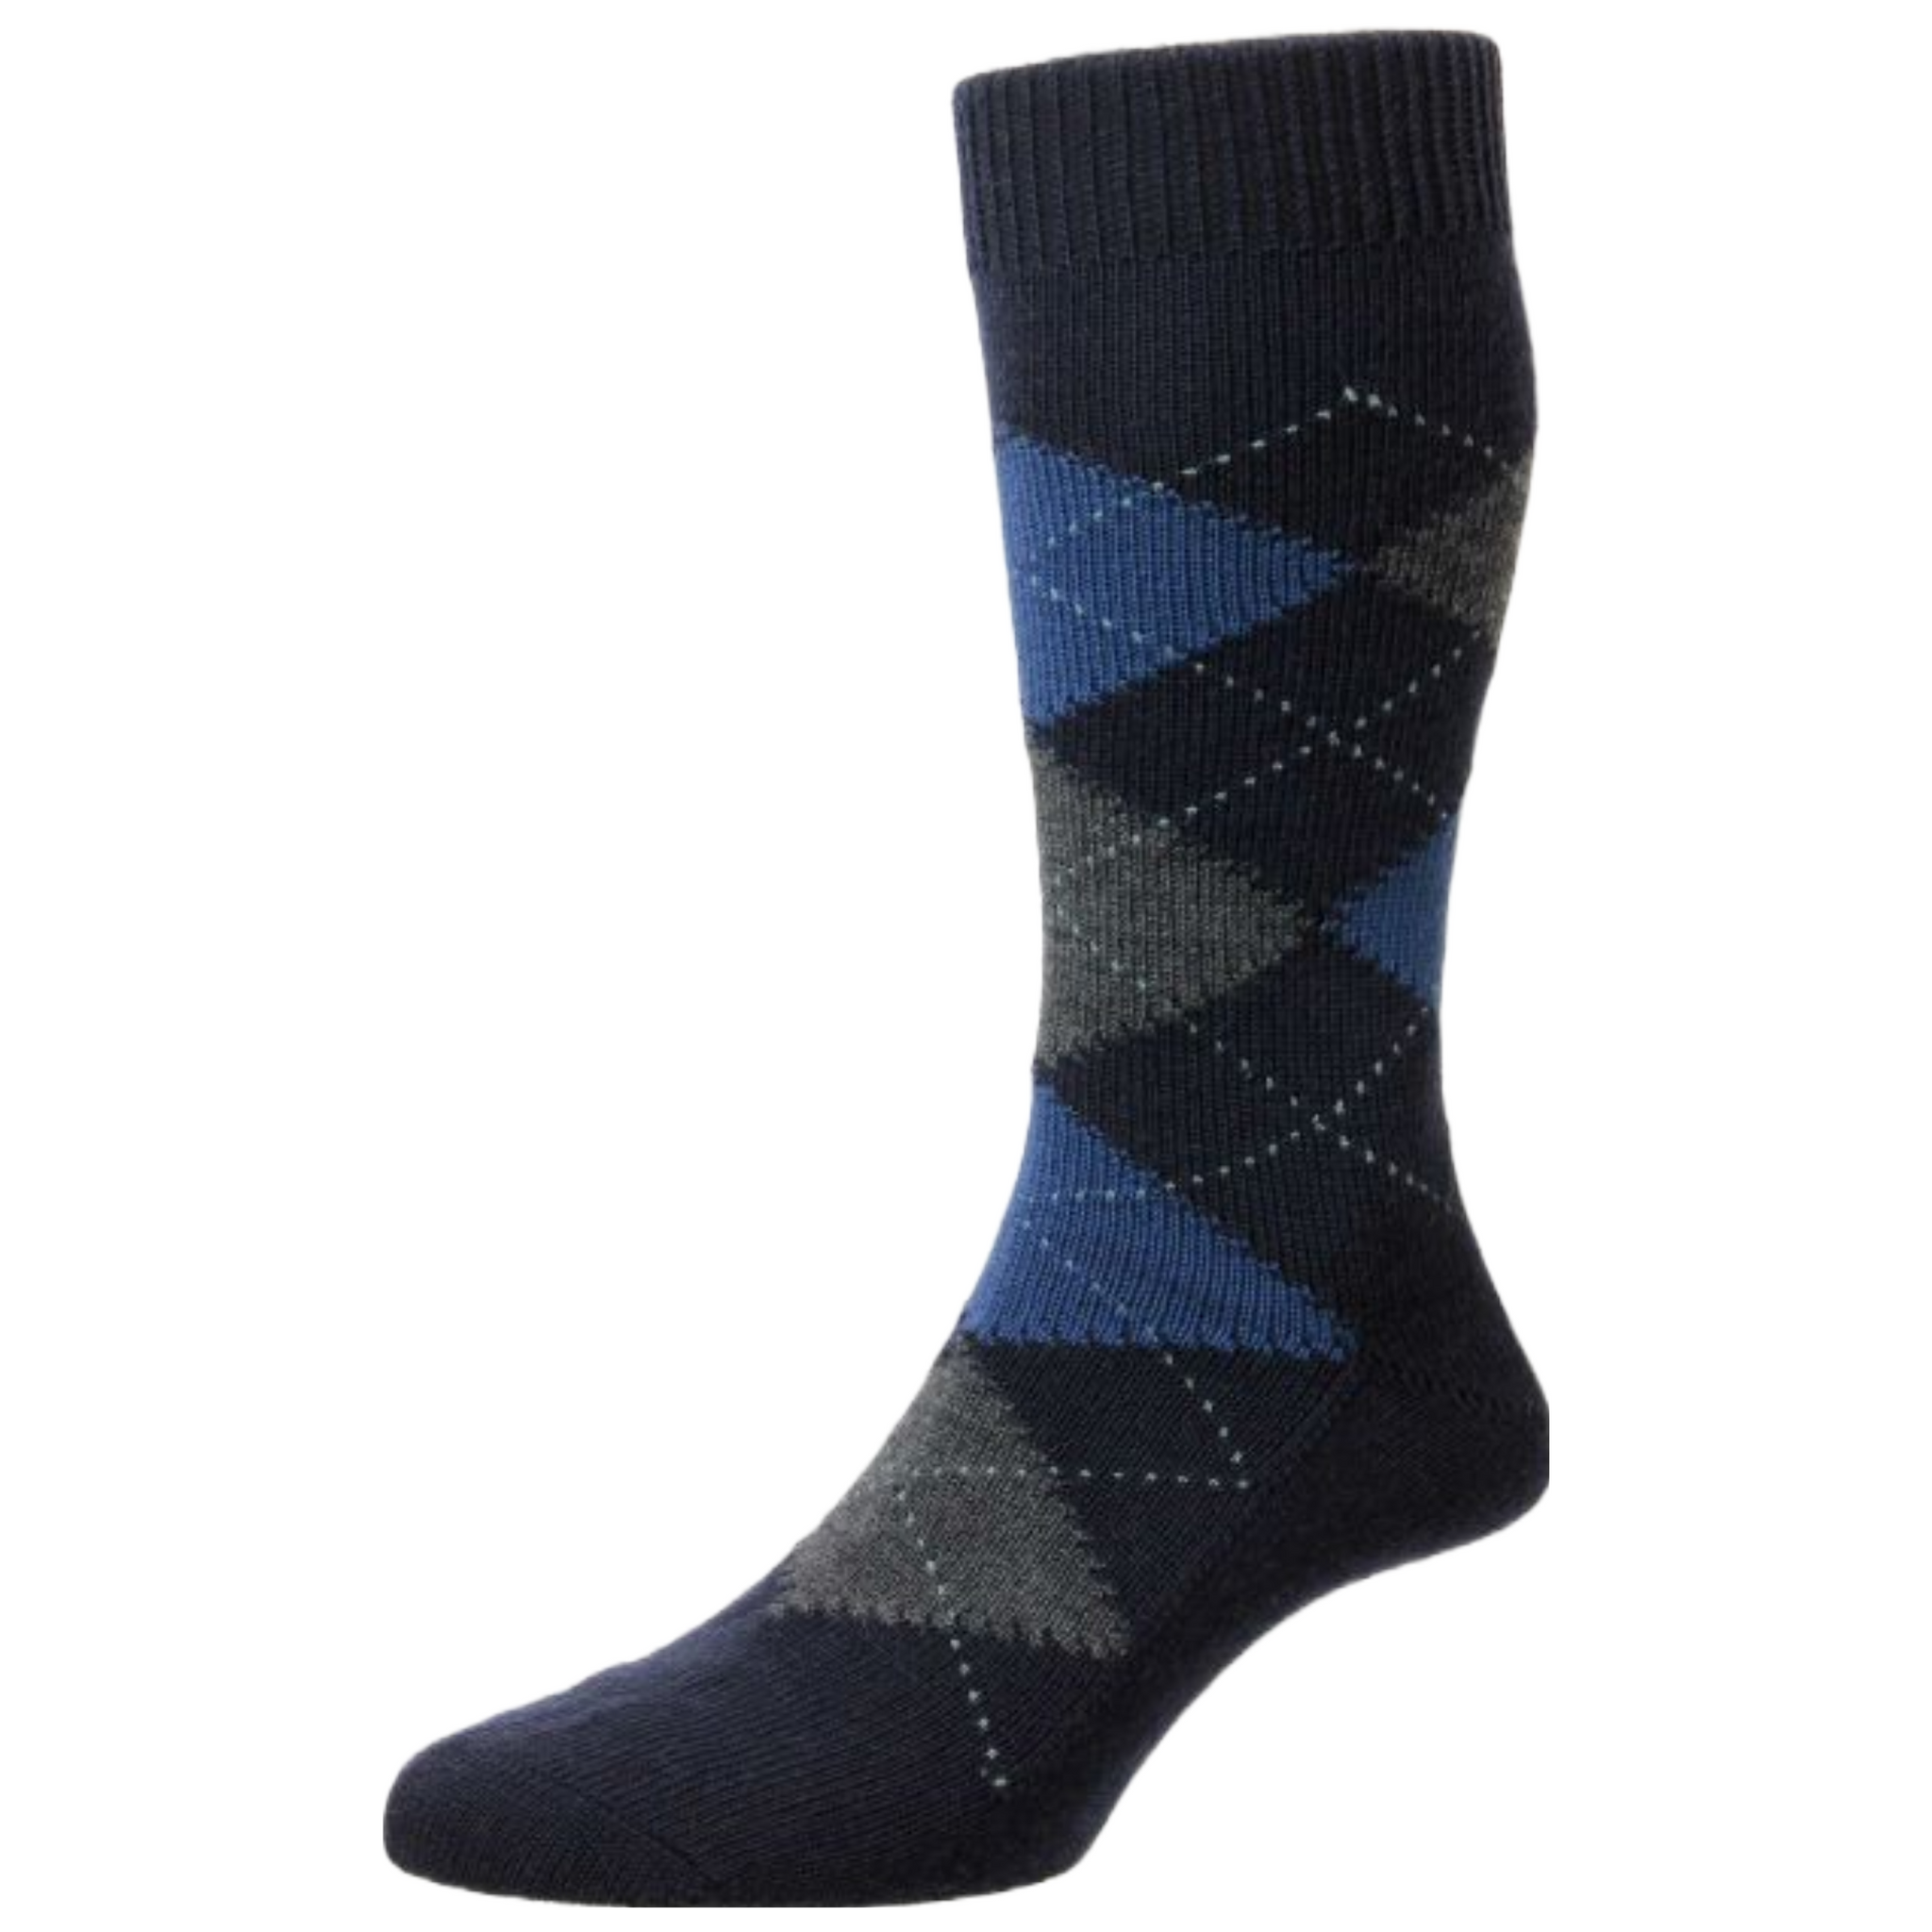 Pantherella - Socks - Merino Wool - Racton - Navy - Classic Collection